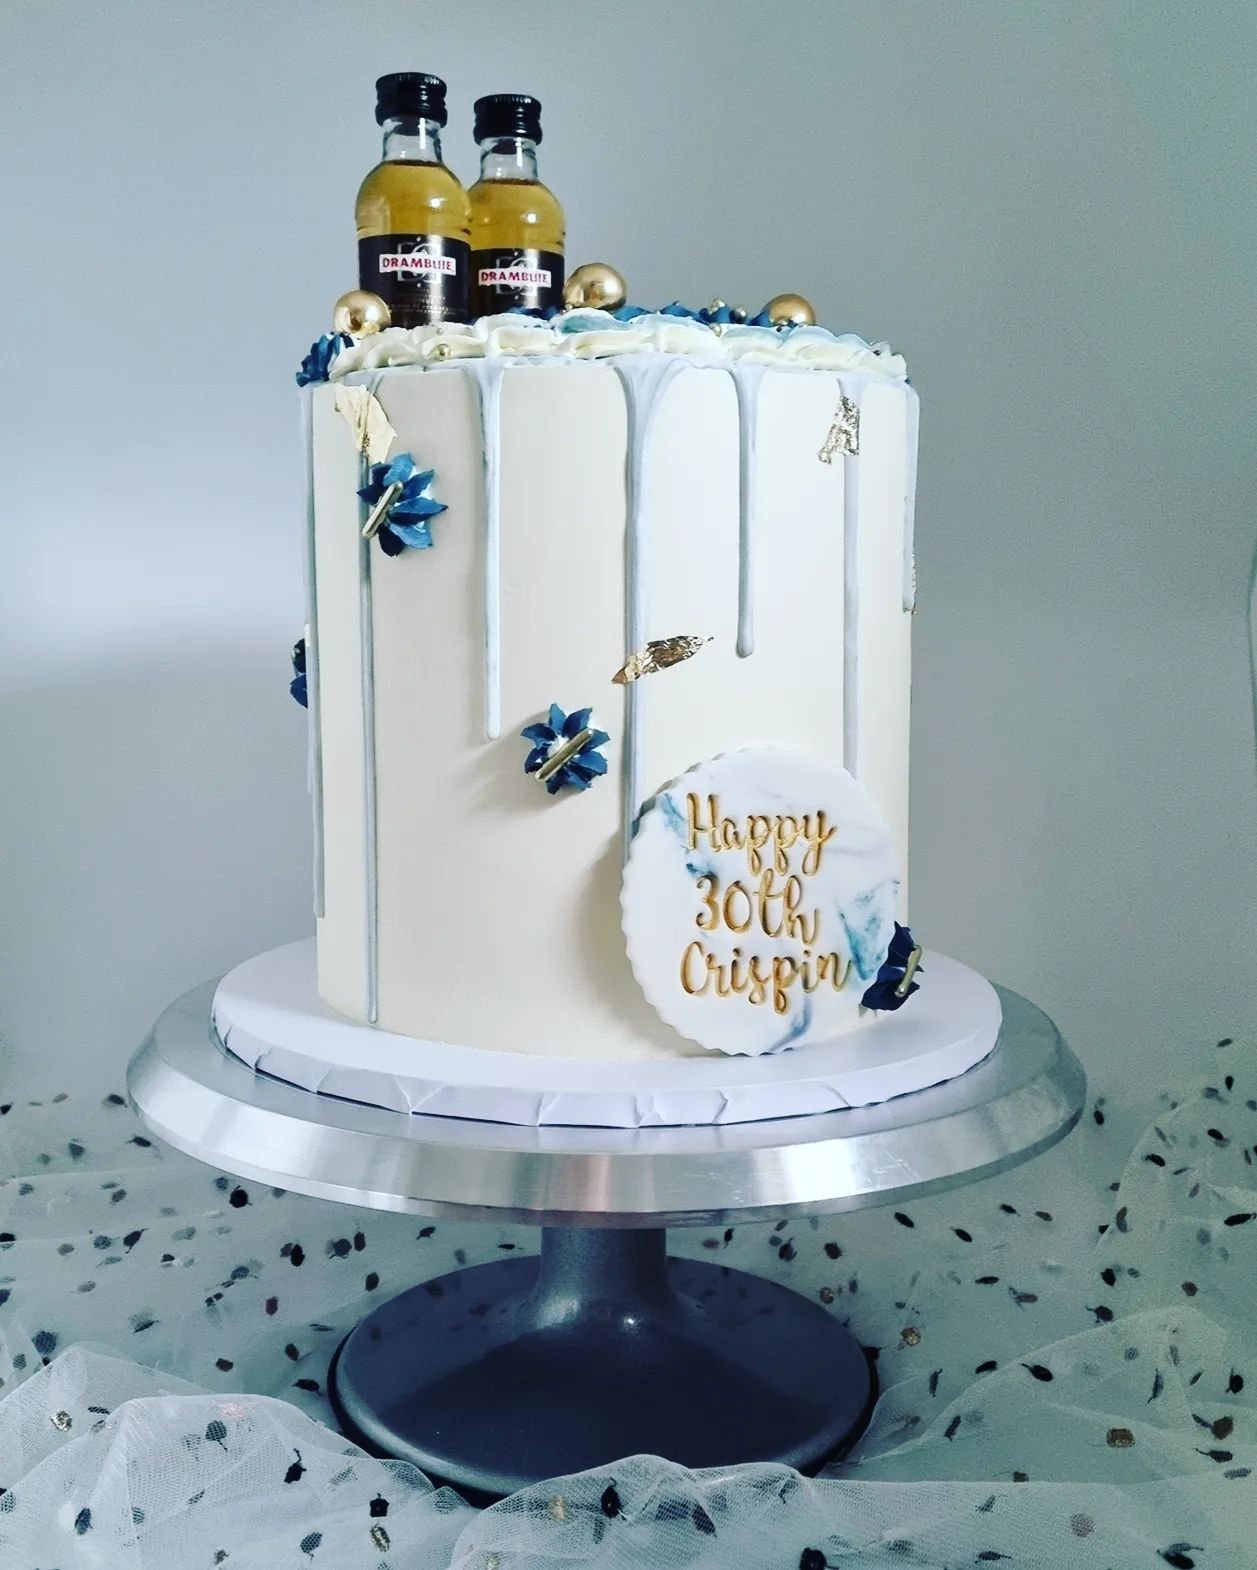 Crispin 30th Cake